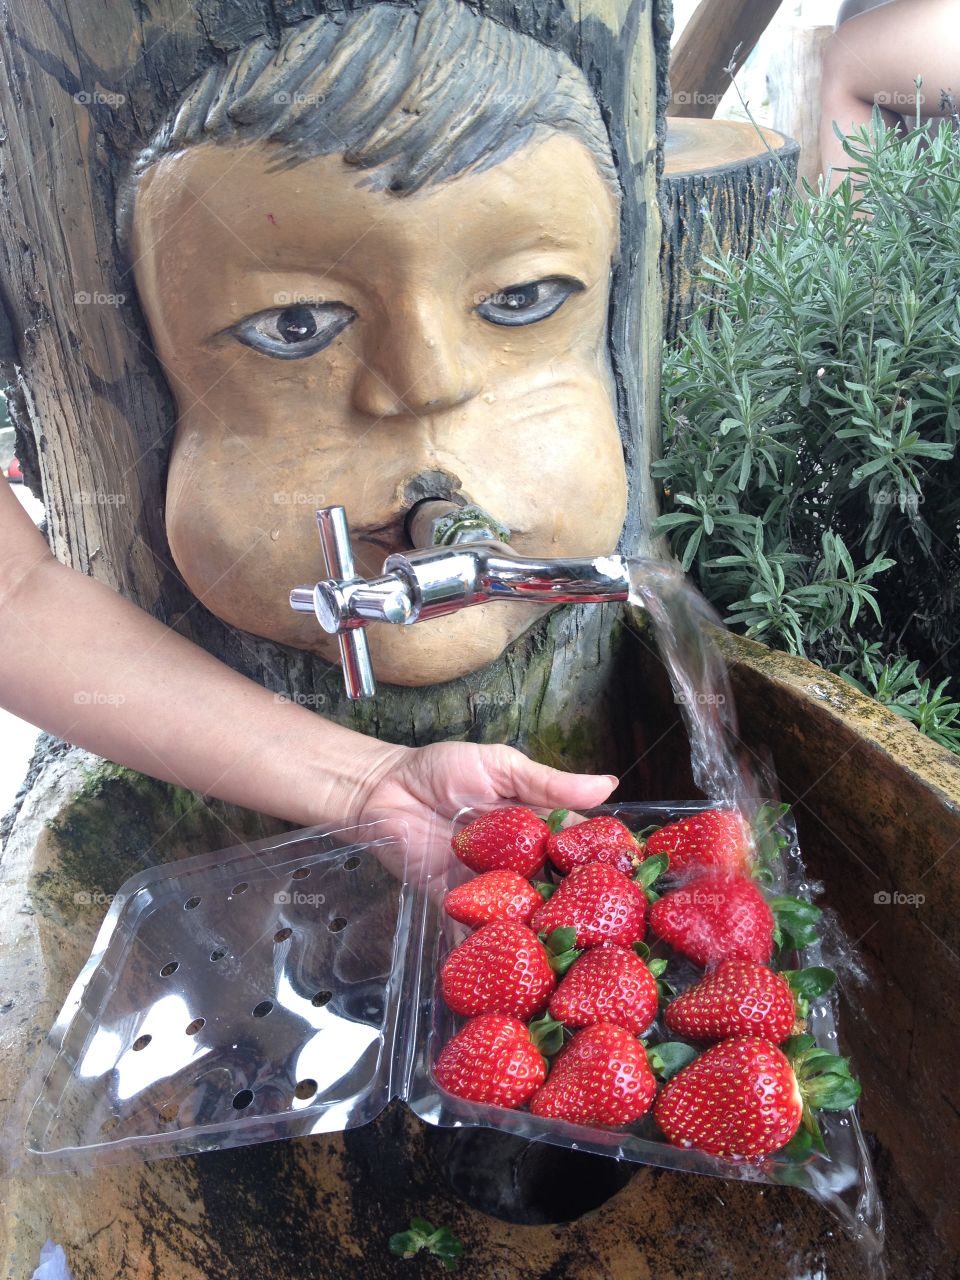 Self picked strawberries 😋🍓